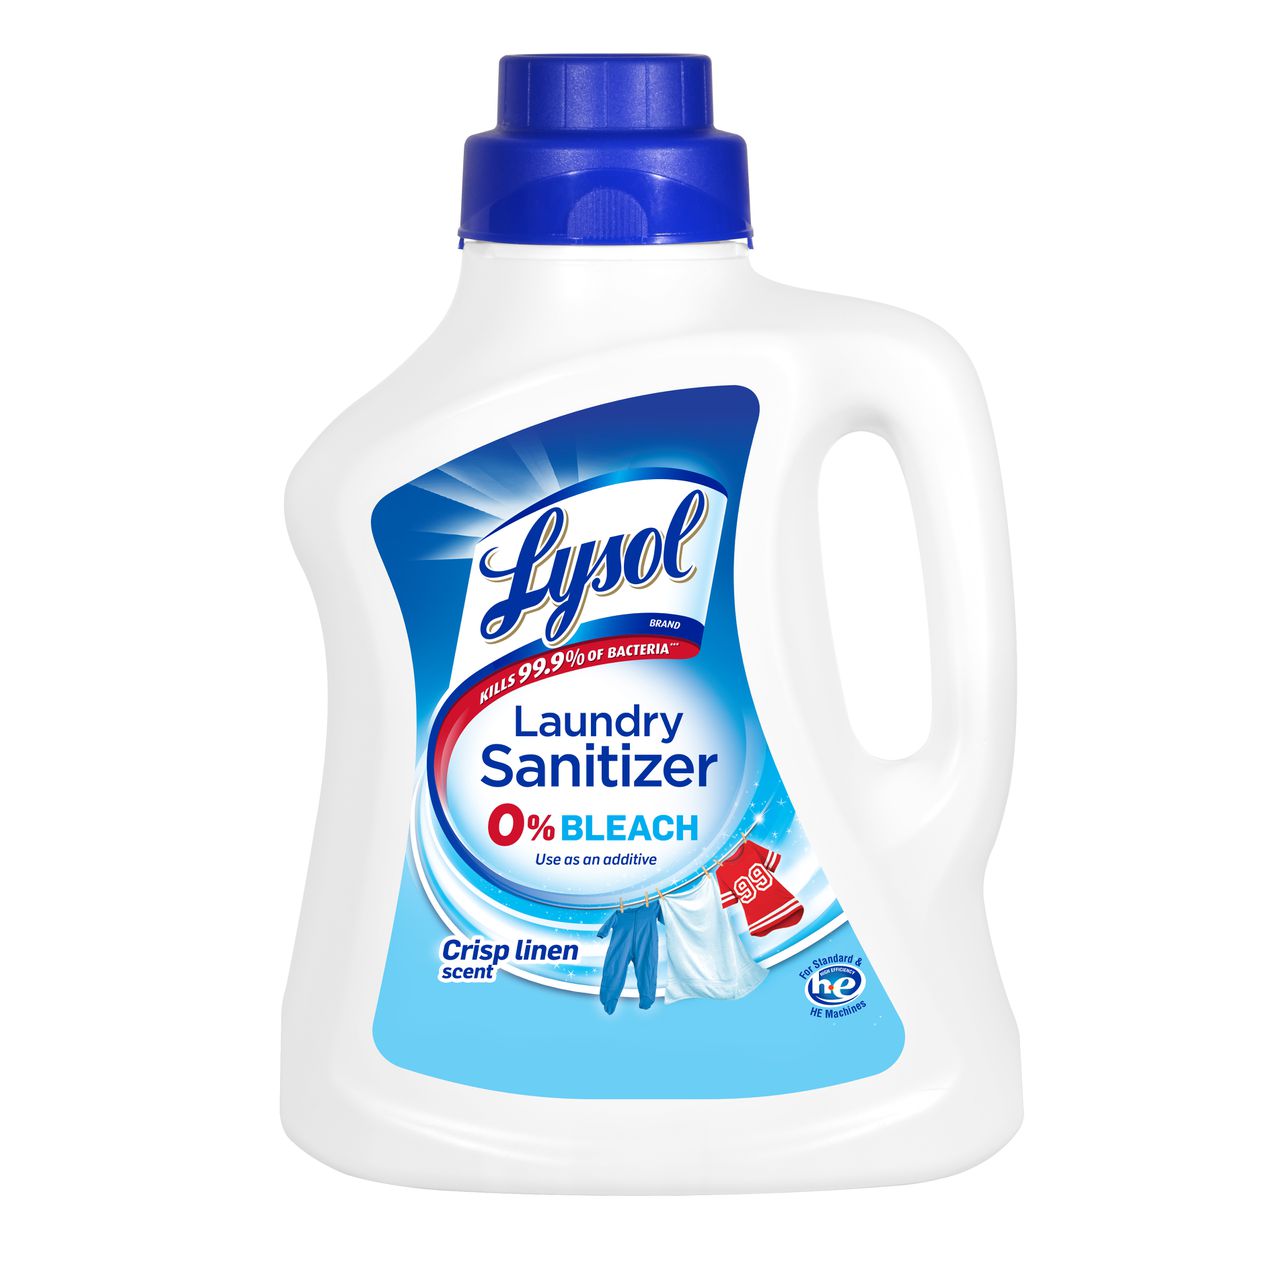 Lysol Laundry Sanitizer Rebate